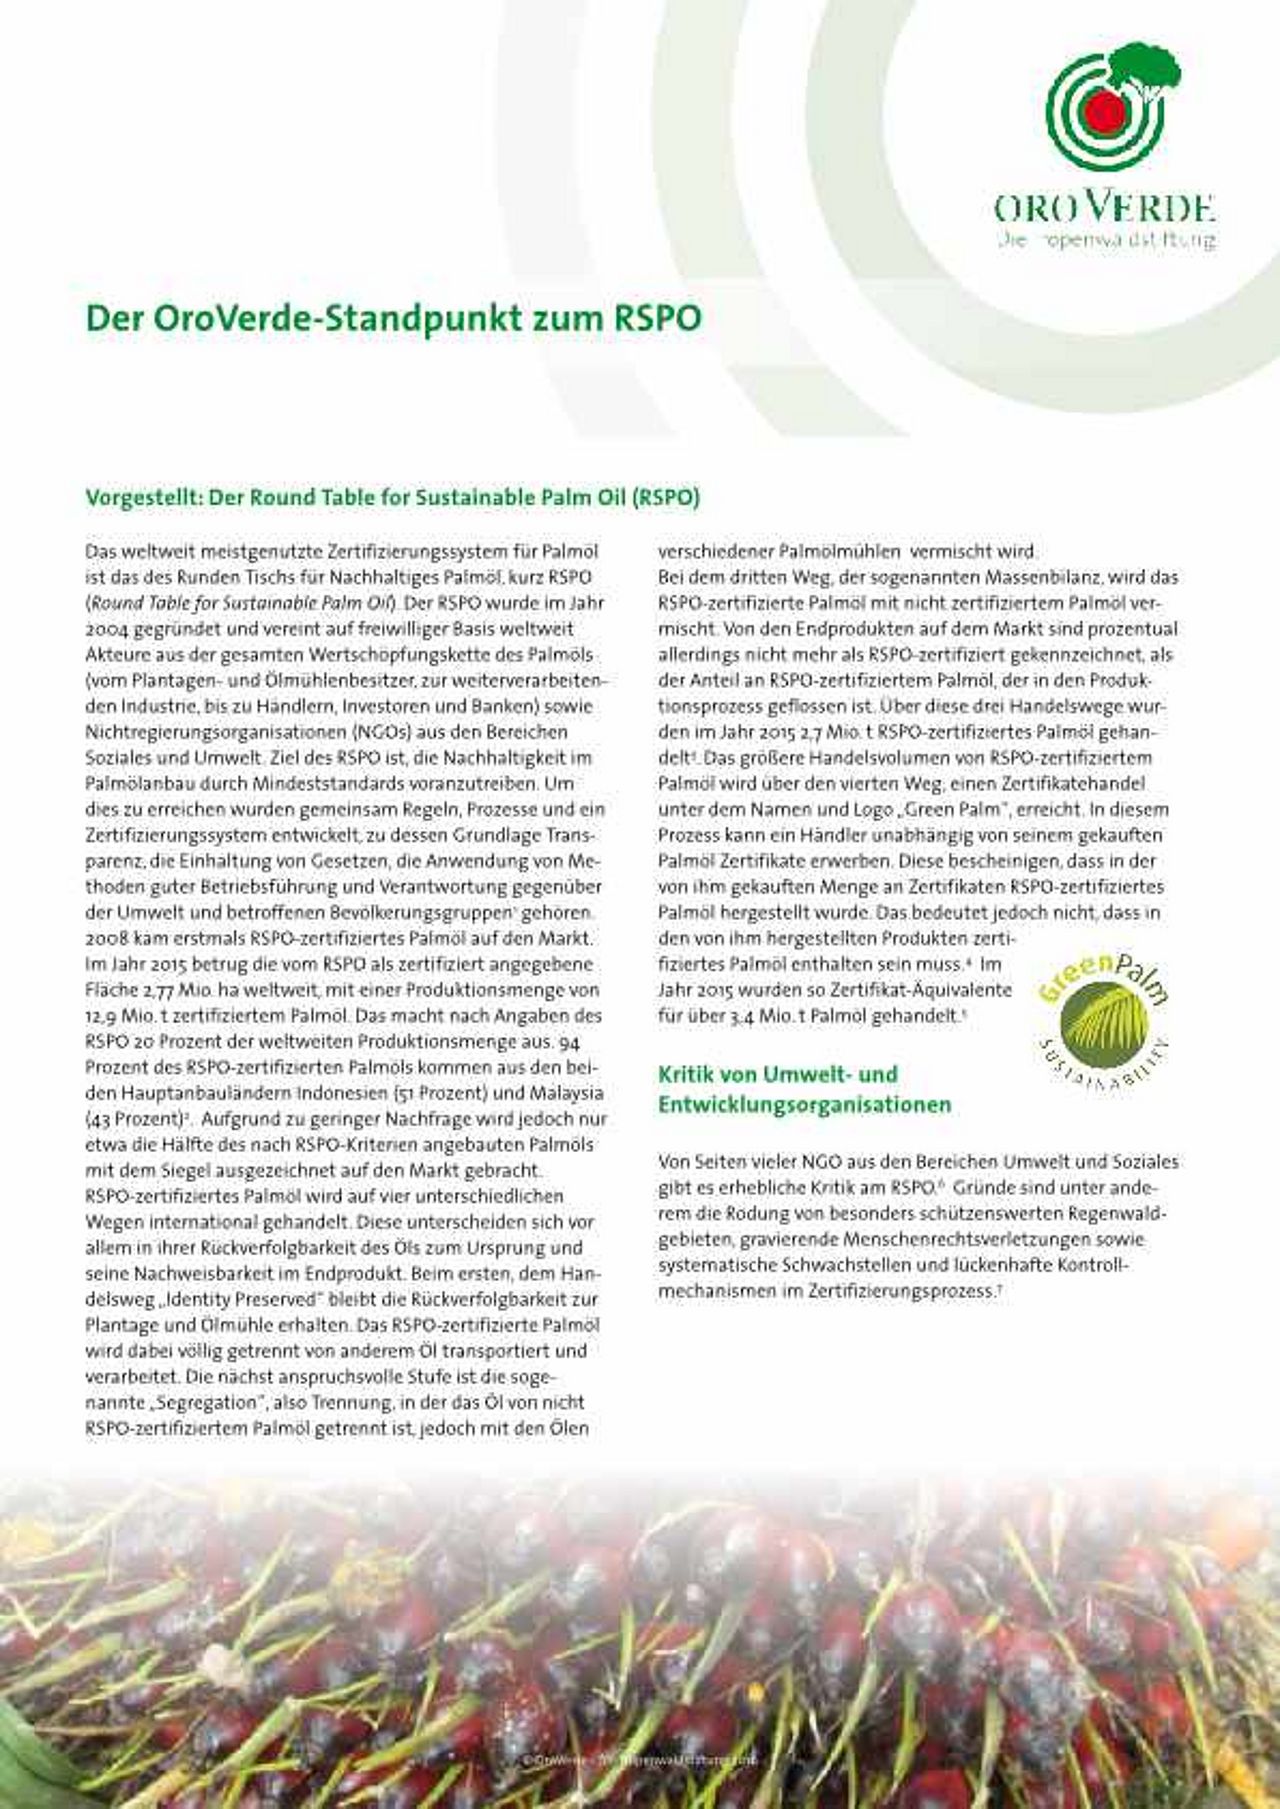 Positionspapier von OroVerde zu Round Table of Sustainable Palm Oil (RSPO).